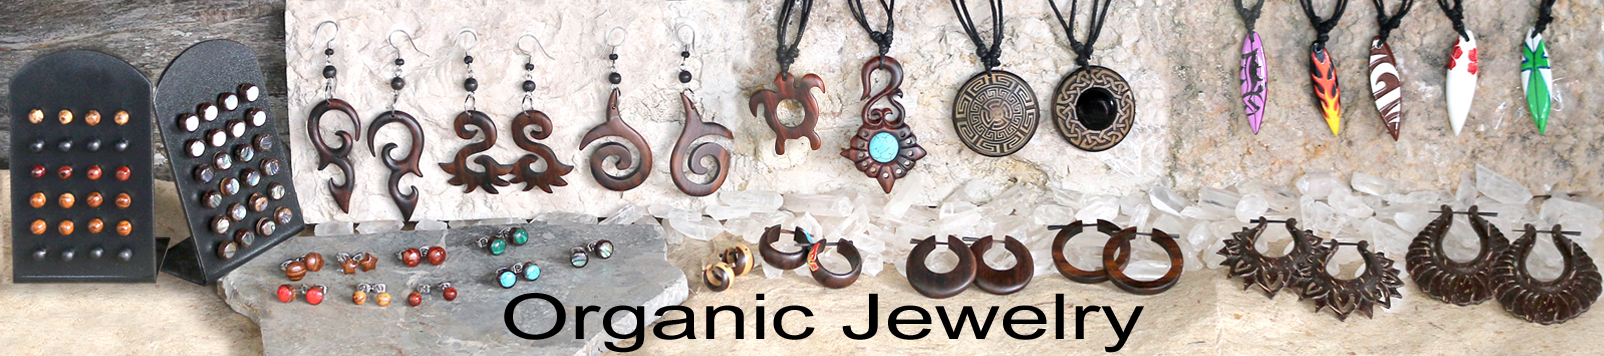 Organic jewelry wholesale